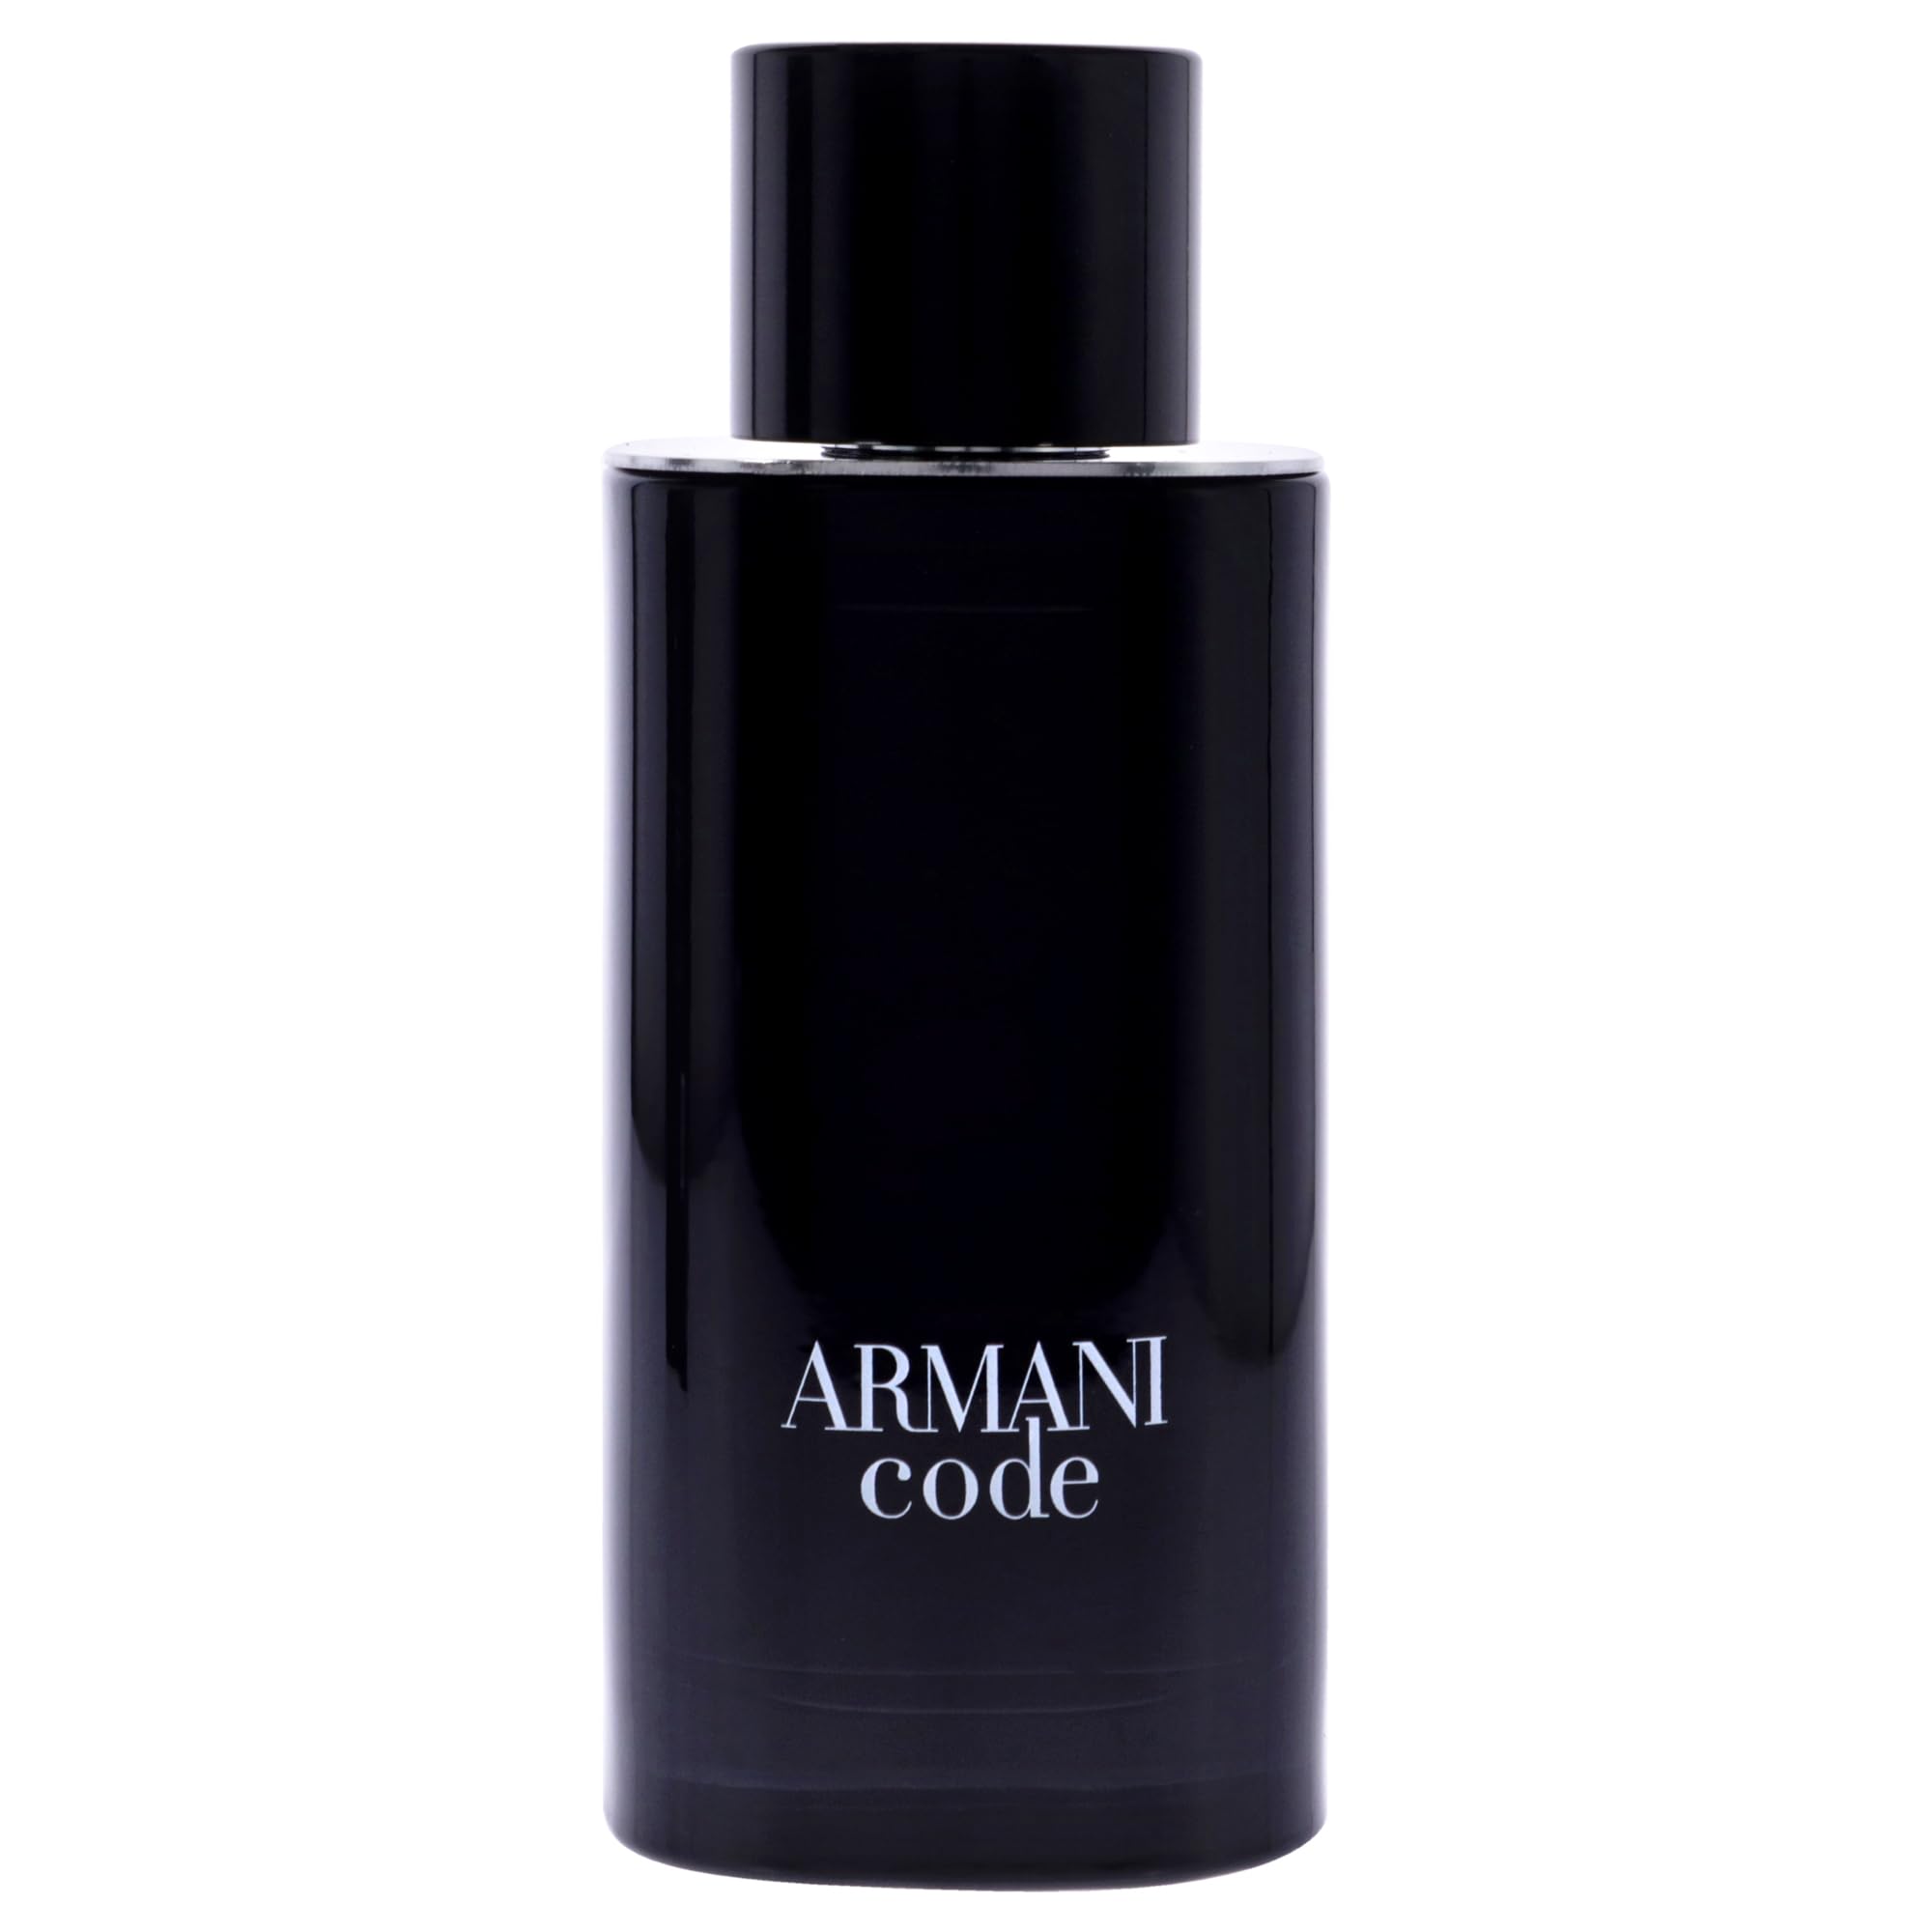 Giorgio Armani Armani Code for Men - 4.2 oz EDT Spray (Refillable)